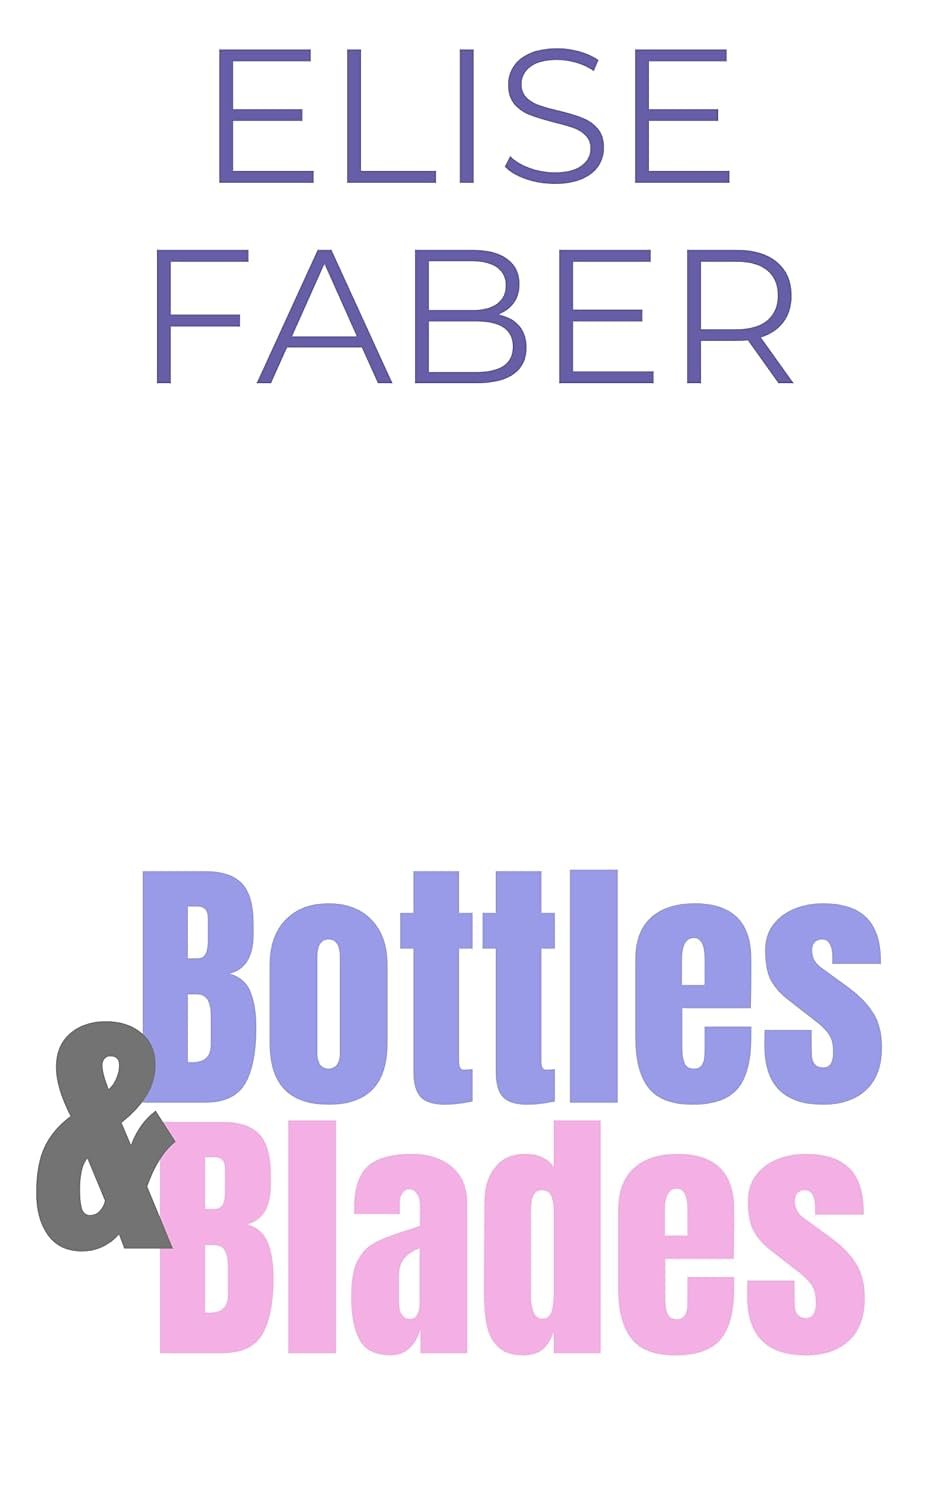 Bottles & Blades